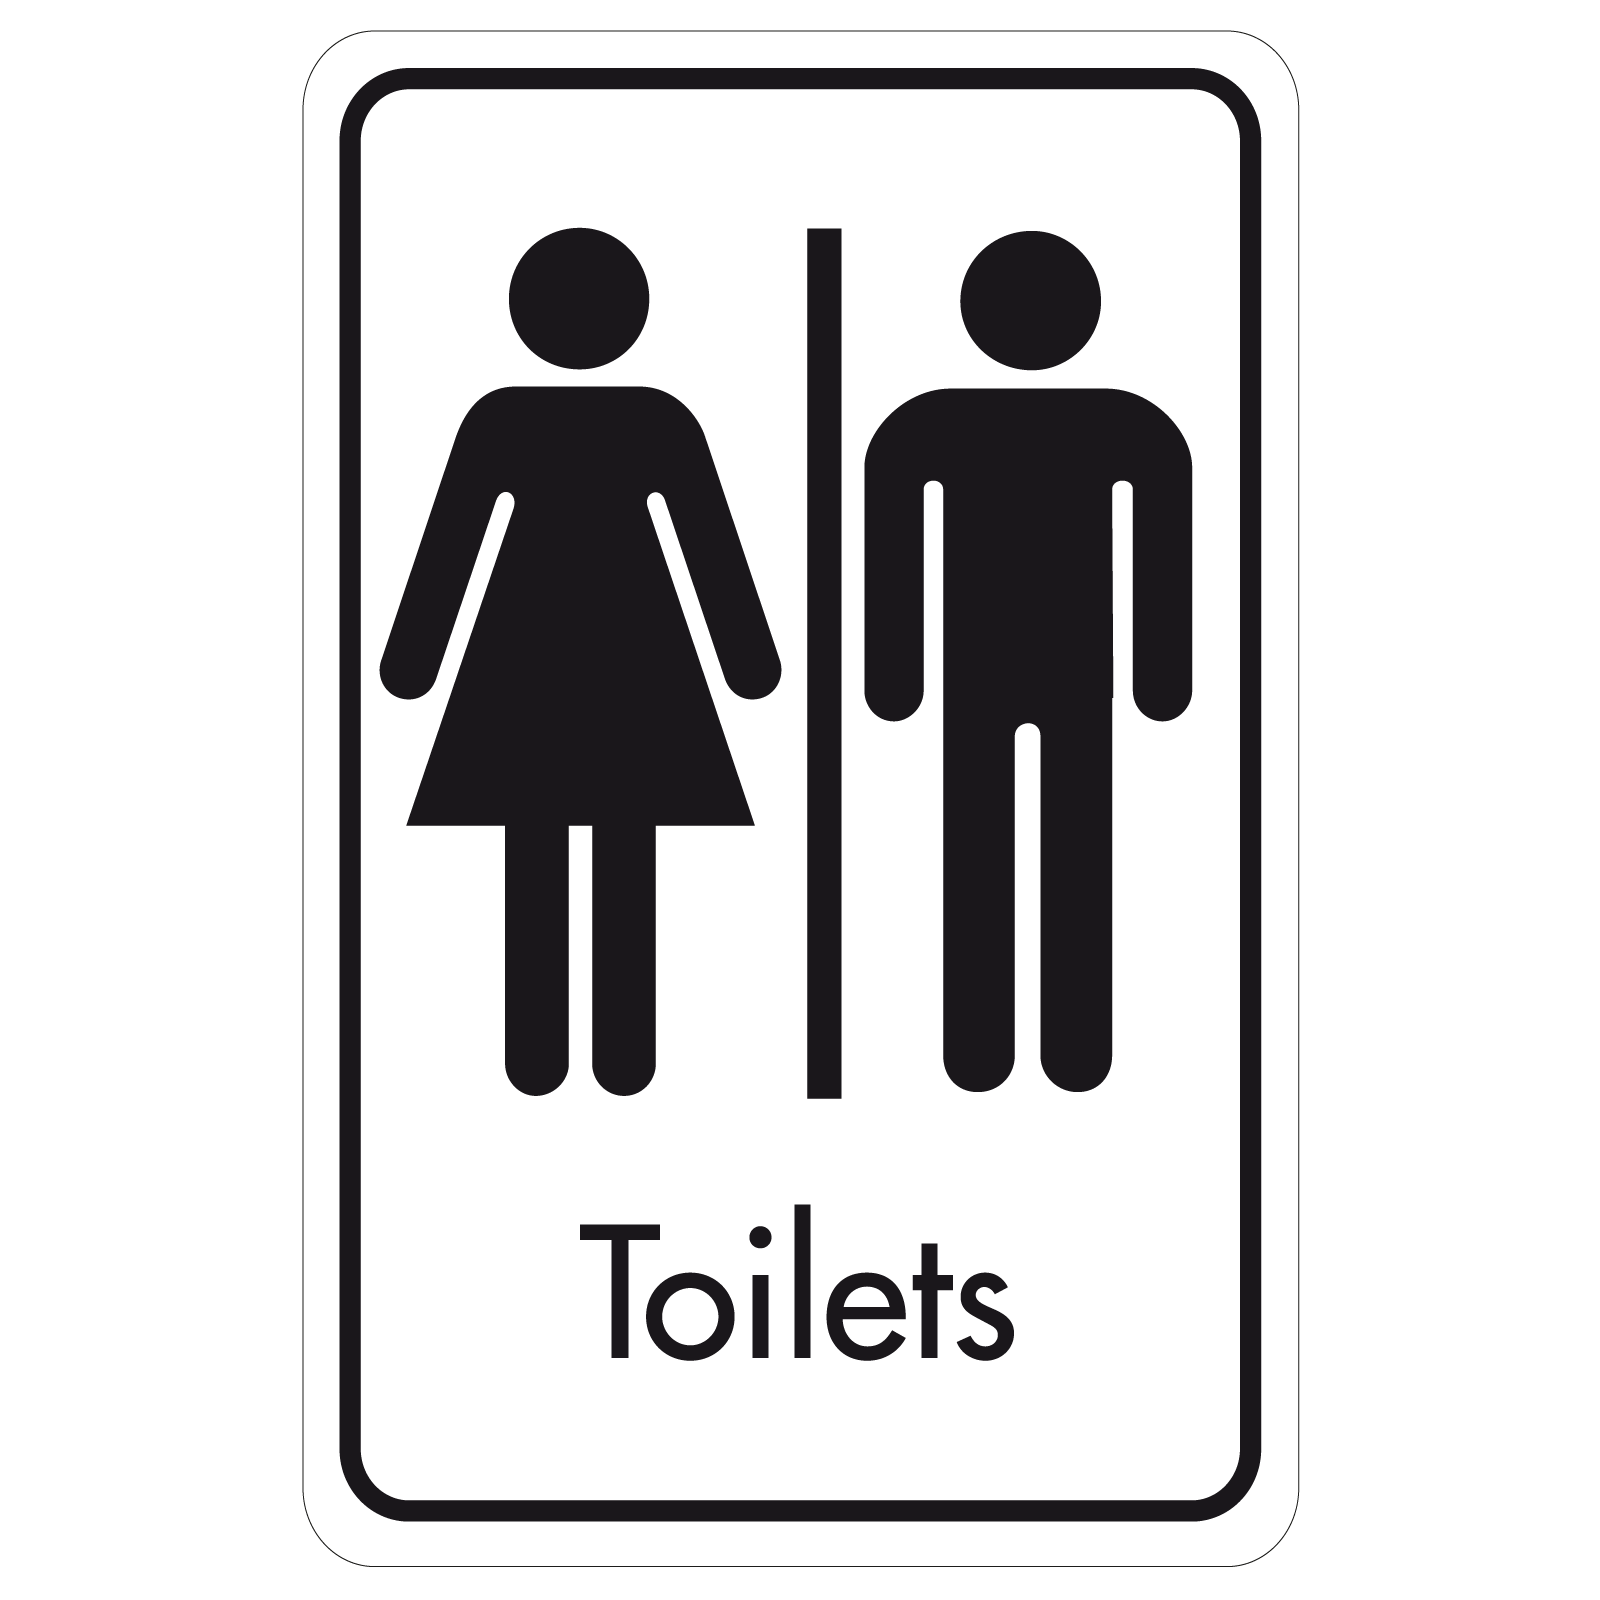 Large Toilets Door Sign - Black on White 